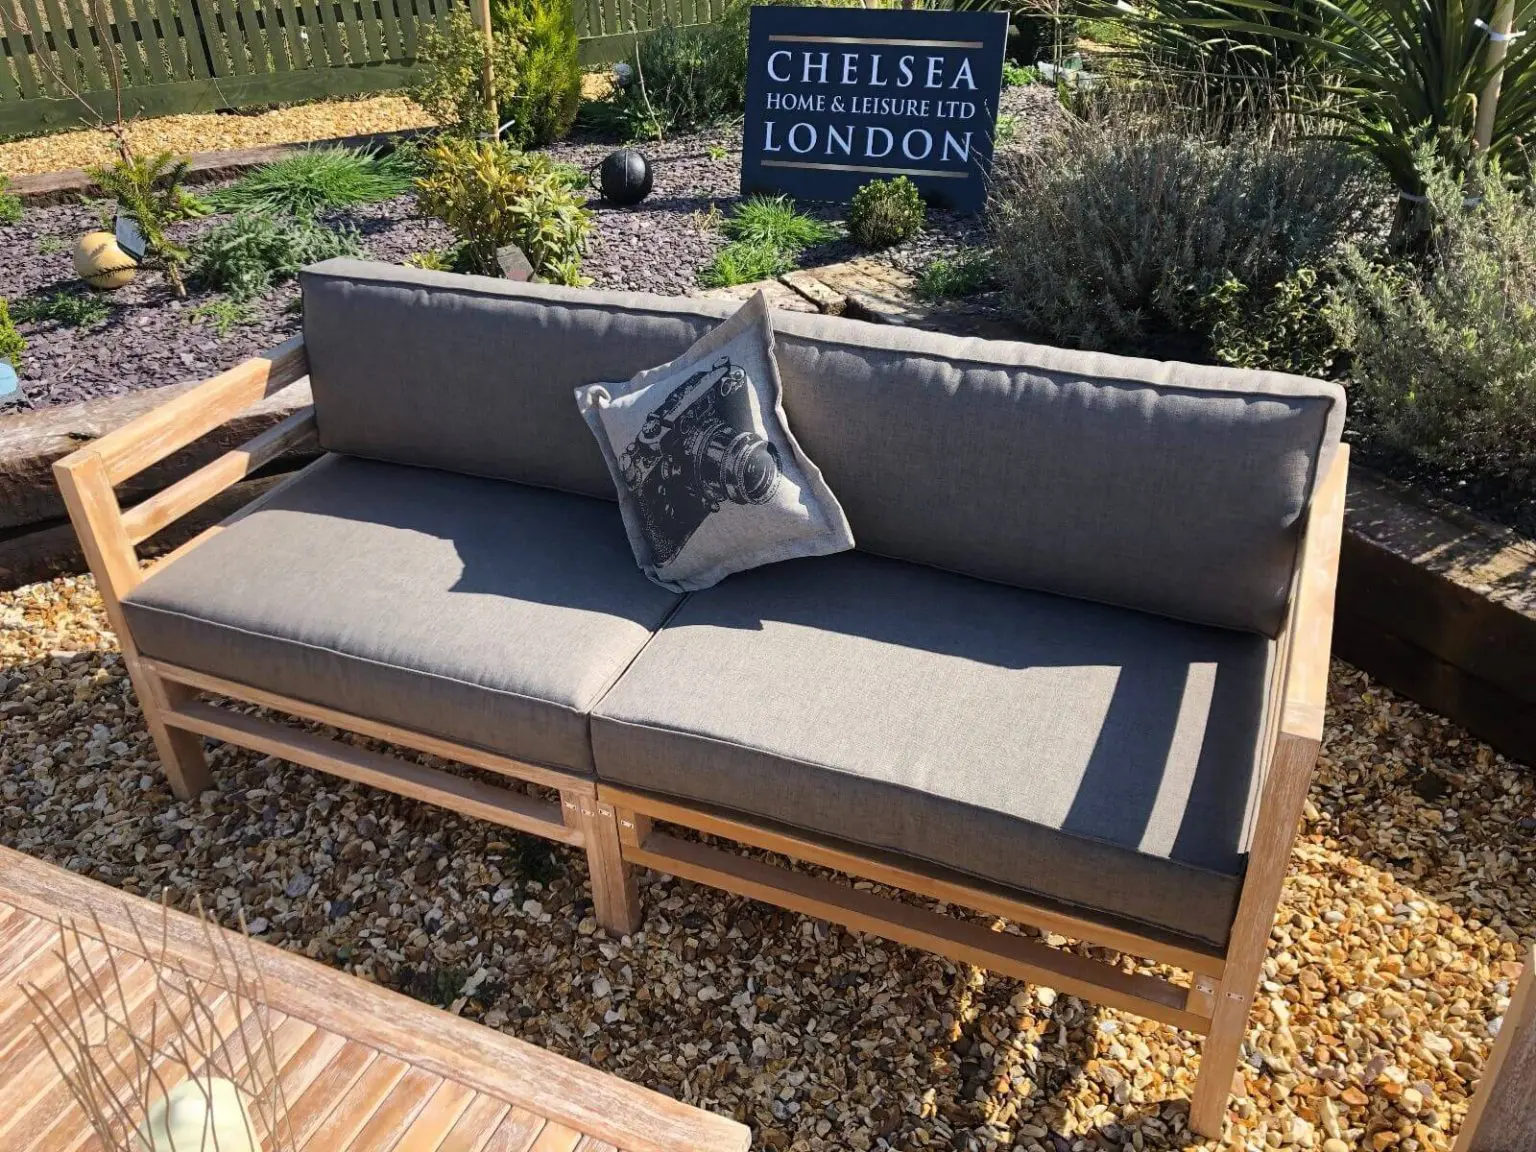 Teak garden sofa set - Chelsea Home and Leisure Ltd